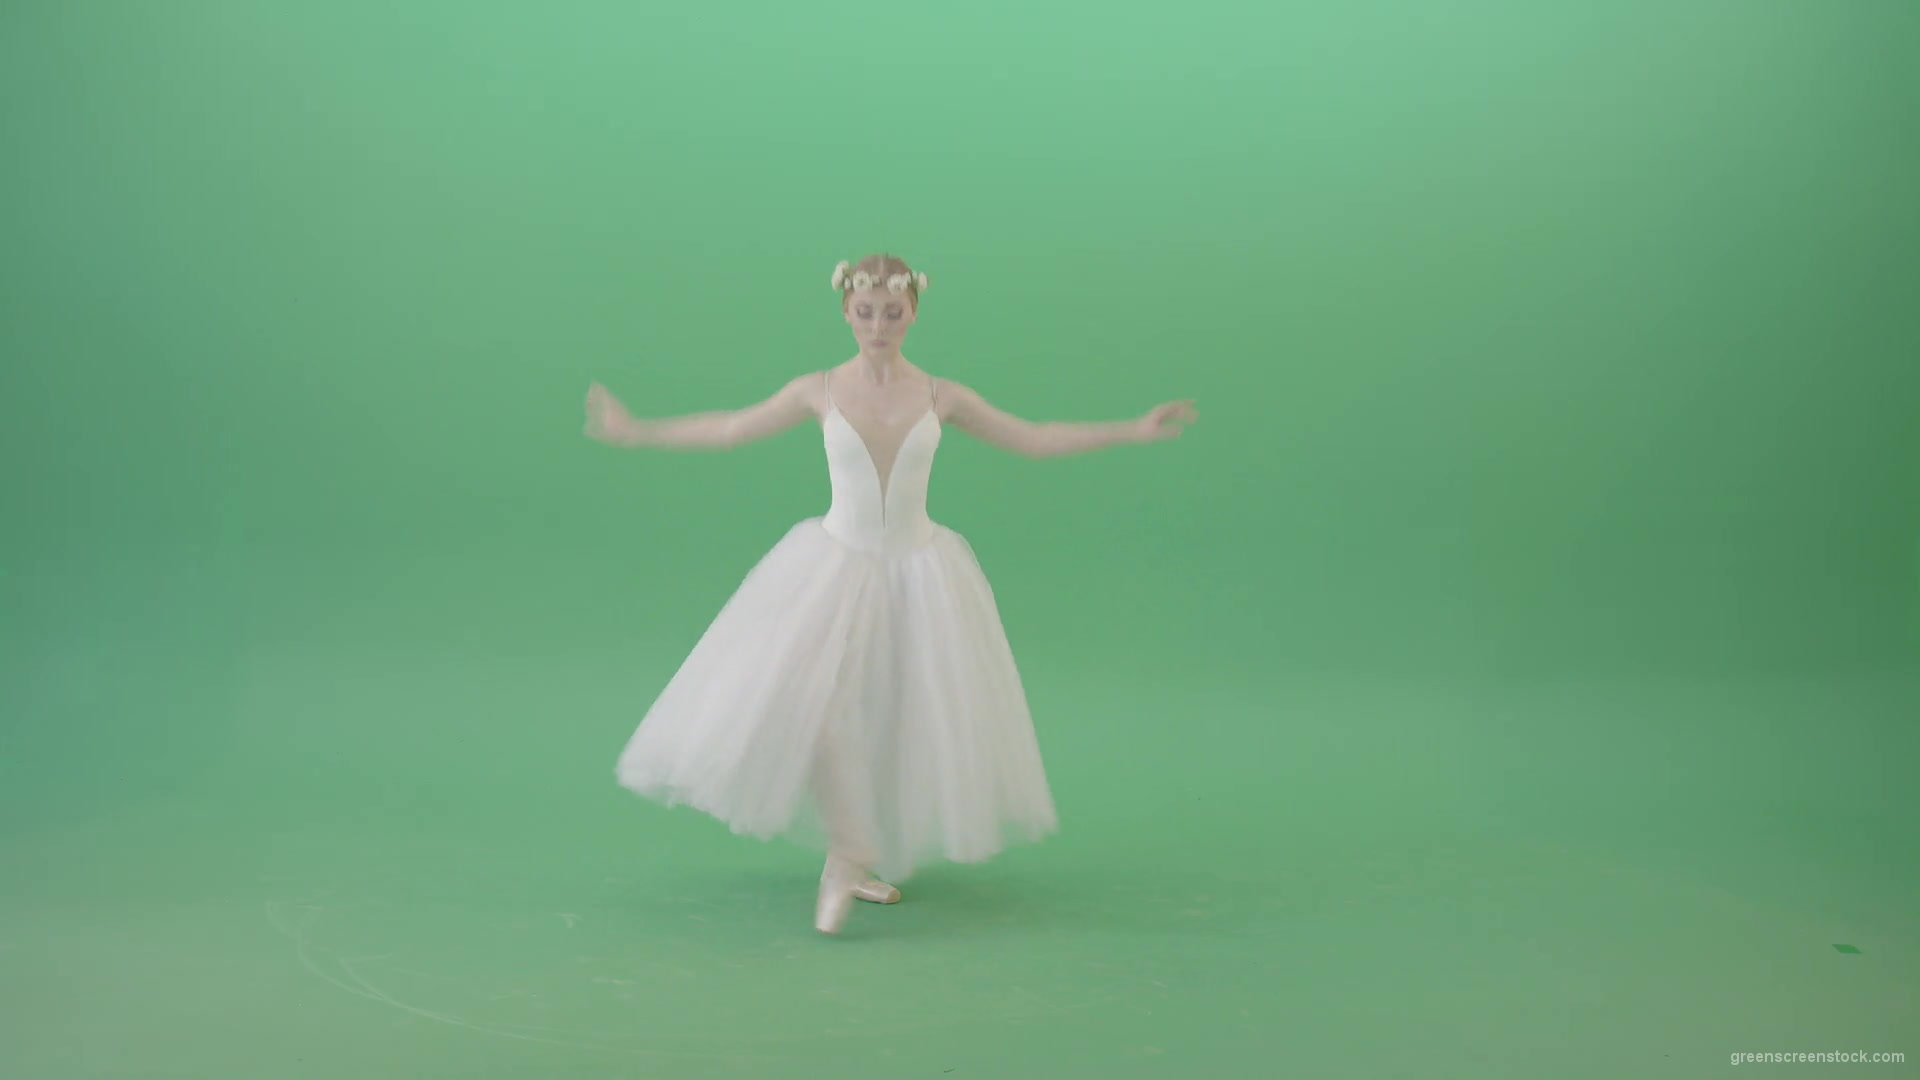 Royal-elegant-greetings-regards-by-Ballet-Dancer-Girl-in-White-Dress-on-Green-Screen-4K-Video-Clip-1920_002 Green Screen Stock